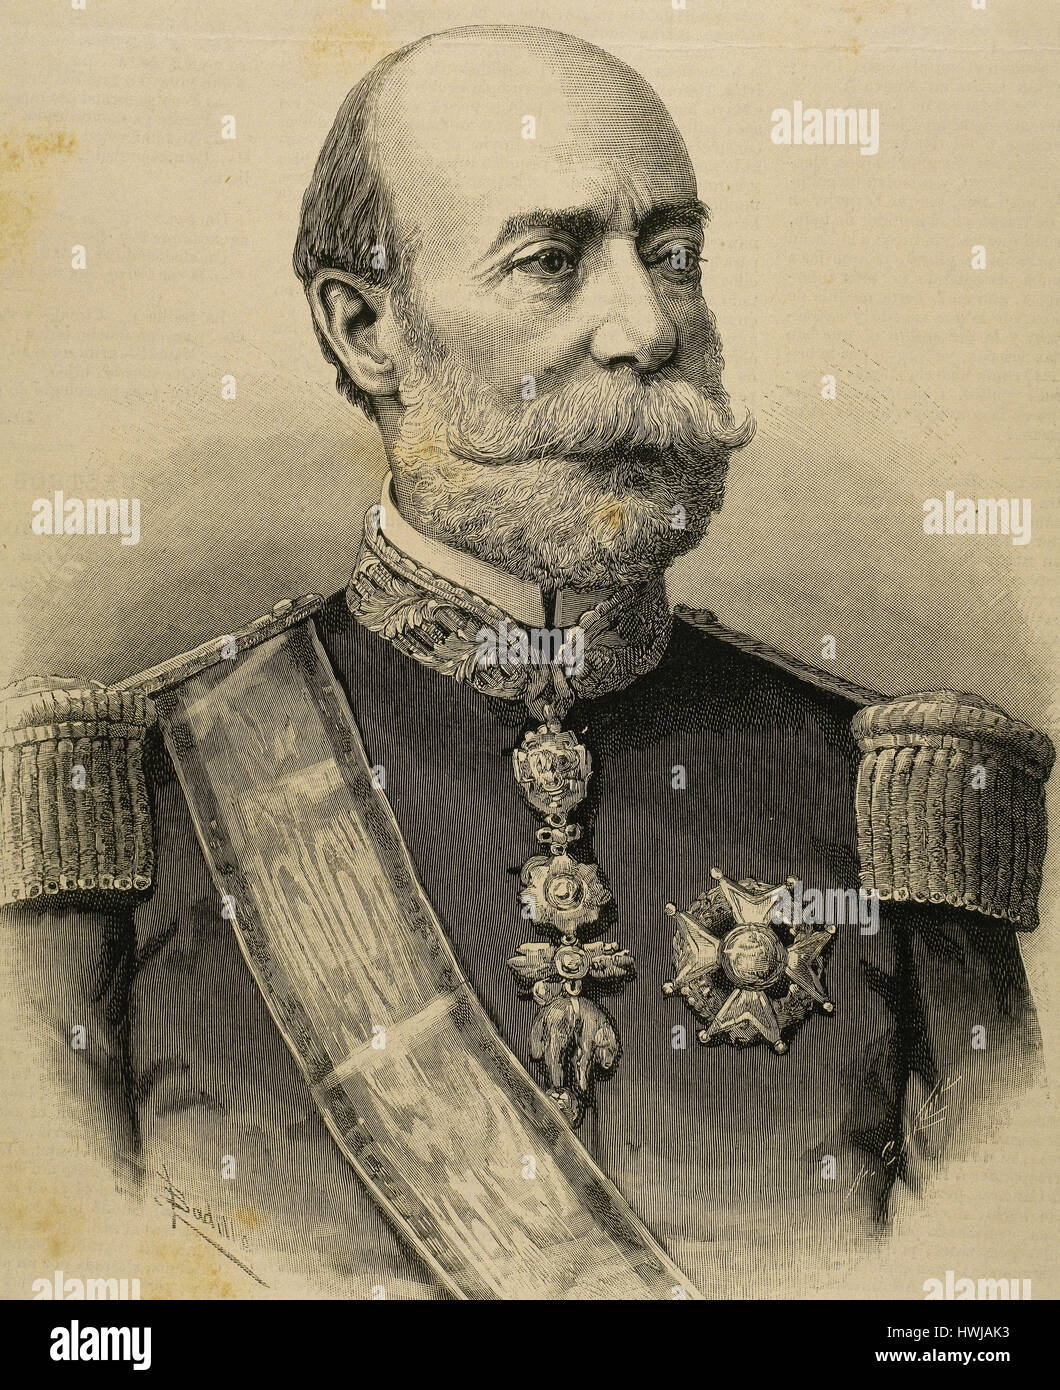 Manuel Pavía y Lacy, 1st Marquis de Novaliches (1814-1896). Spanish marshal. Portrait. Engraving. Stock Photo